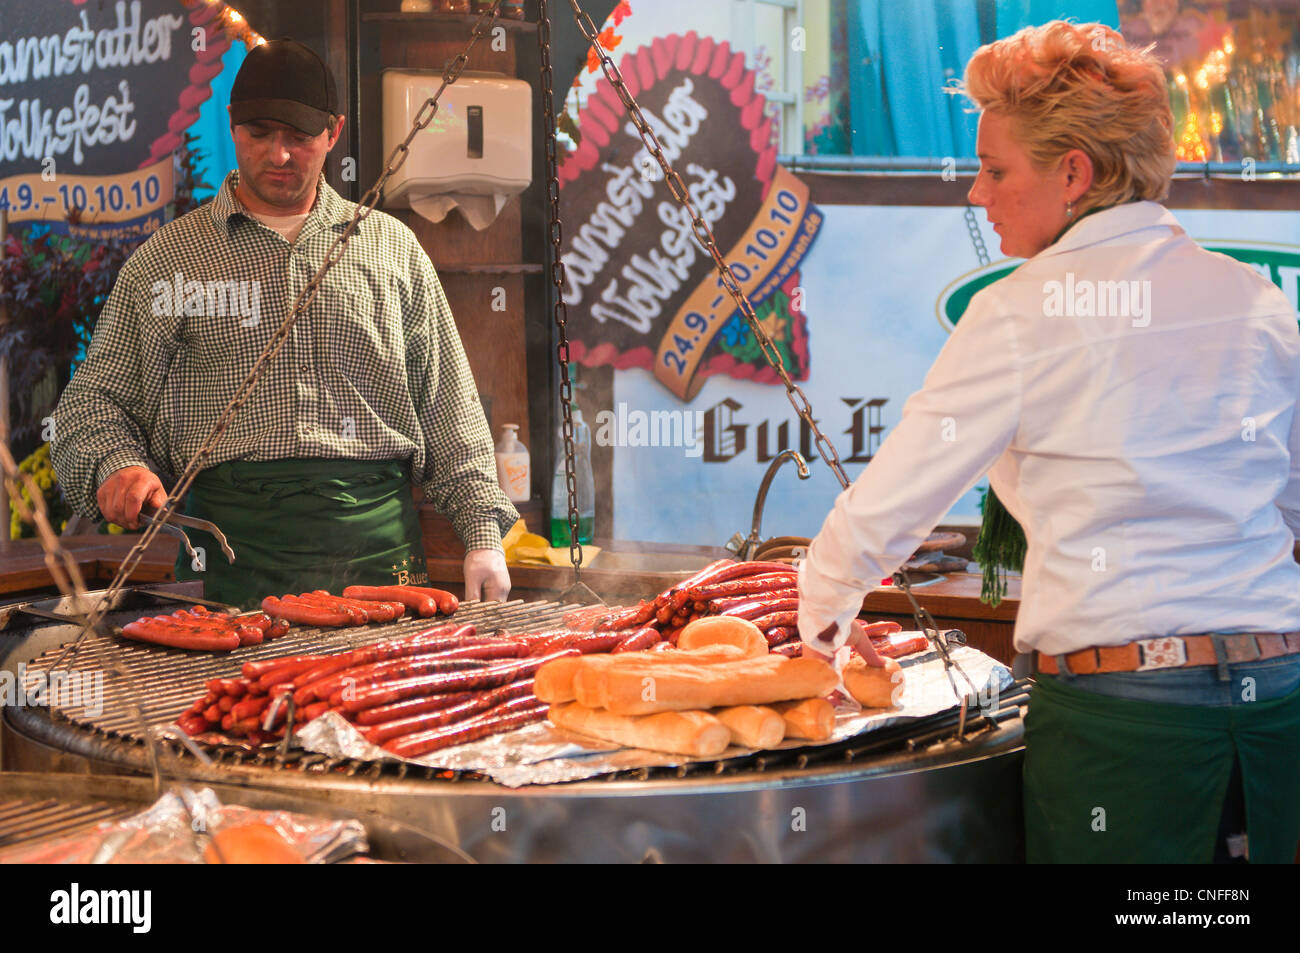 Barbecued meats at the Stuttgart Beer Festival, Cannstatter Wasen, Stuttgart, Germany. Stock Photo